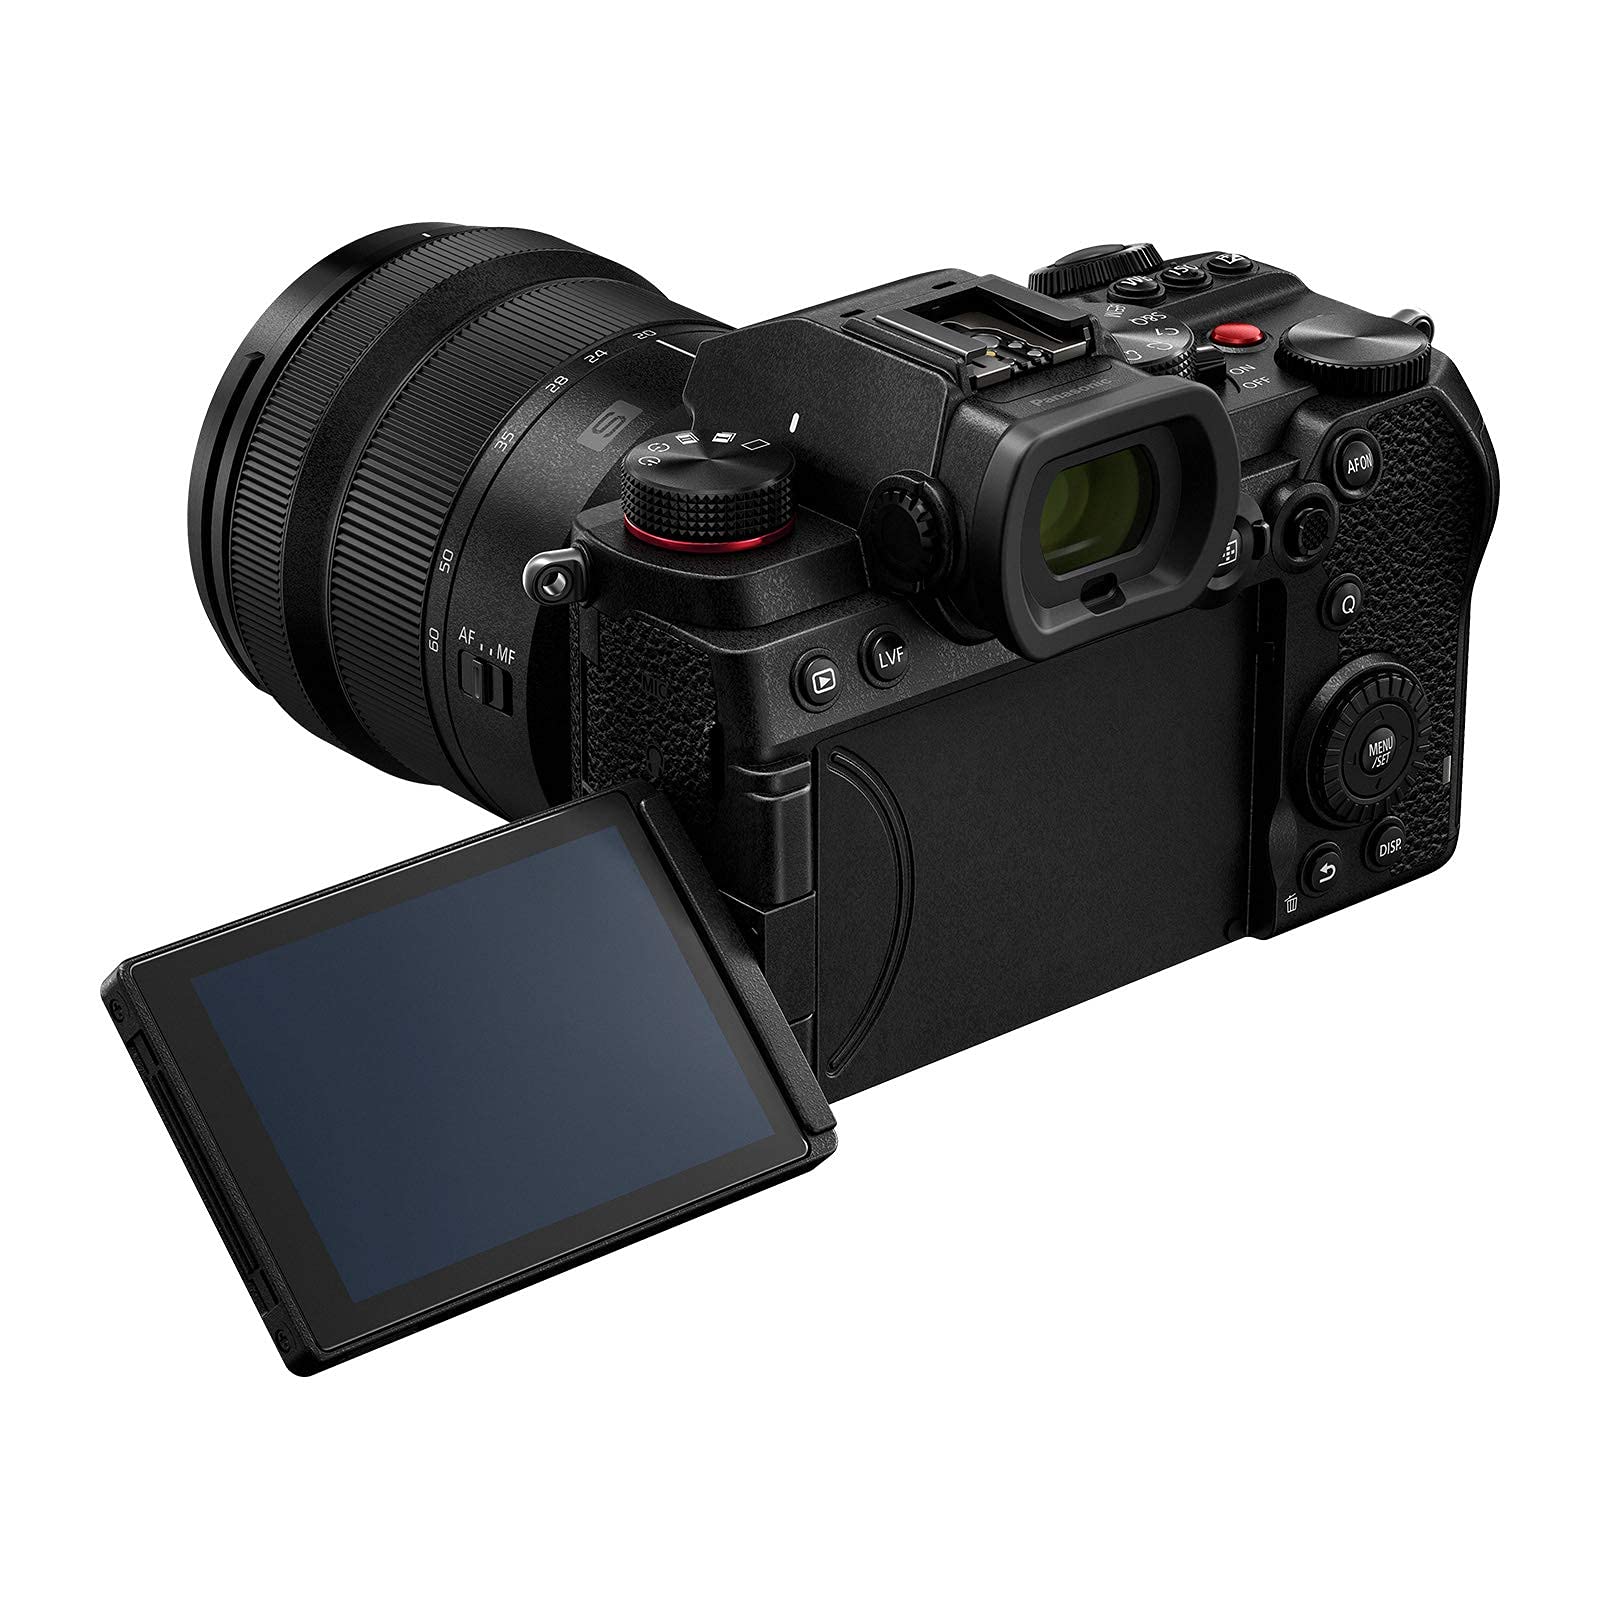 Panasonic LUMIX S5 Full Frame Mirrorless Camera, 4K 60P Video Recording with Flip Screen & WiFi, L-Mount, 5-Axis Dual I.S, DC-S5BODY (Black) (Renewed)